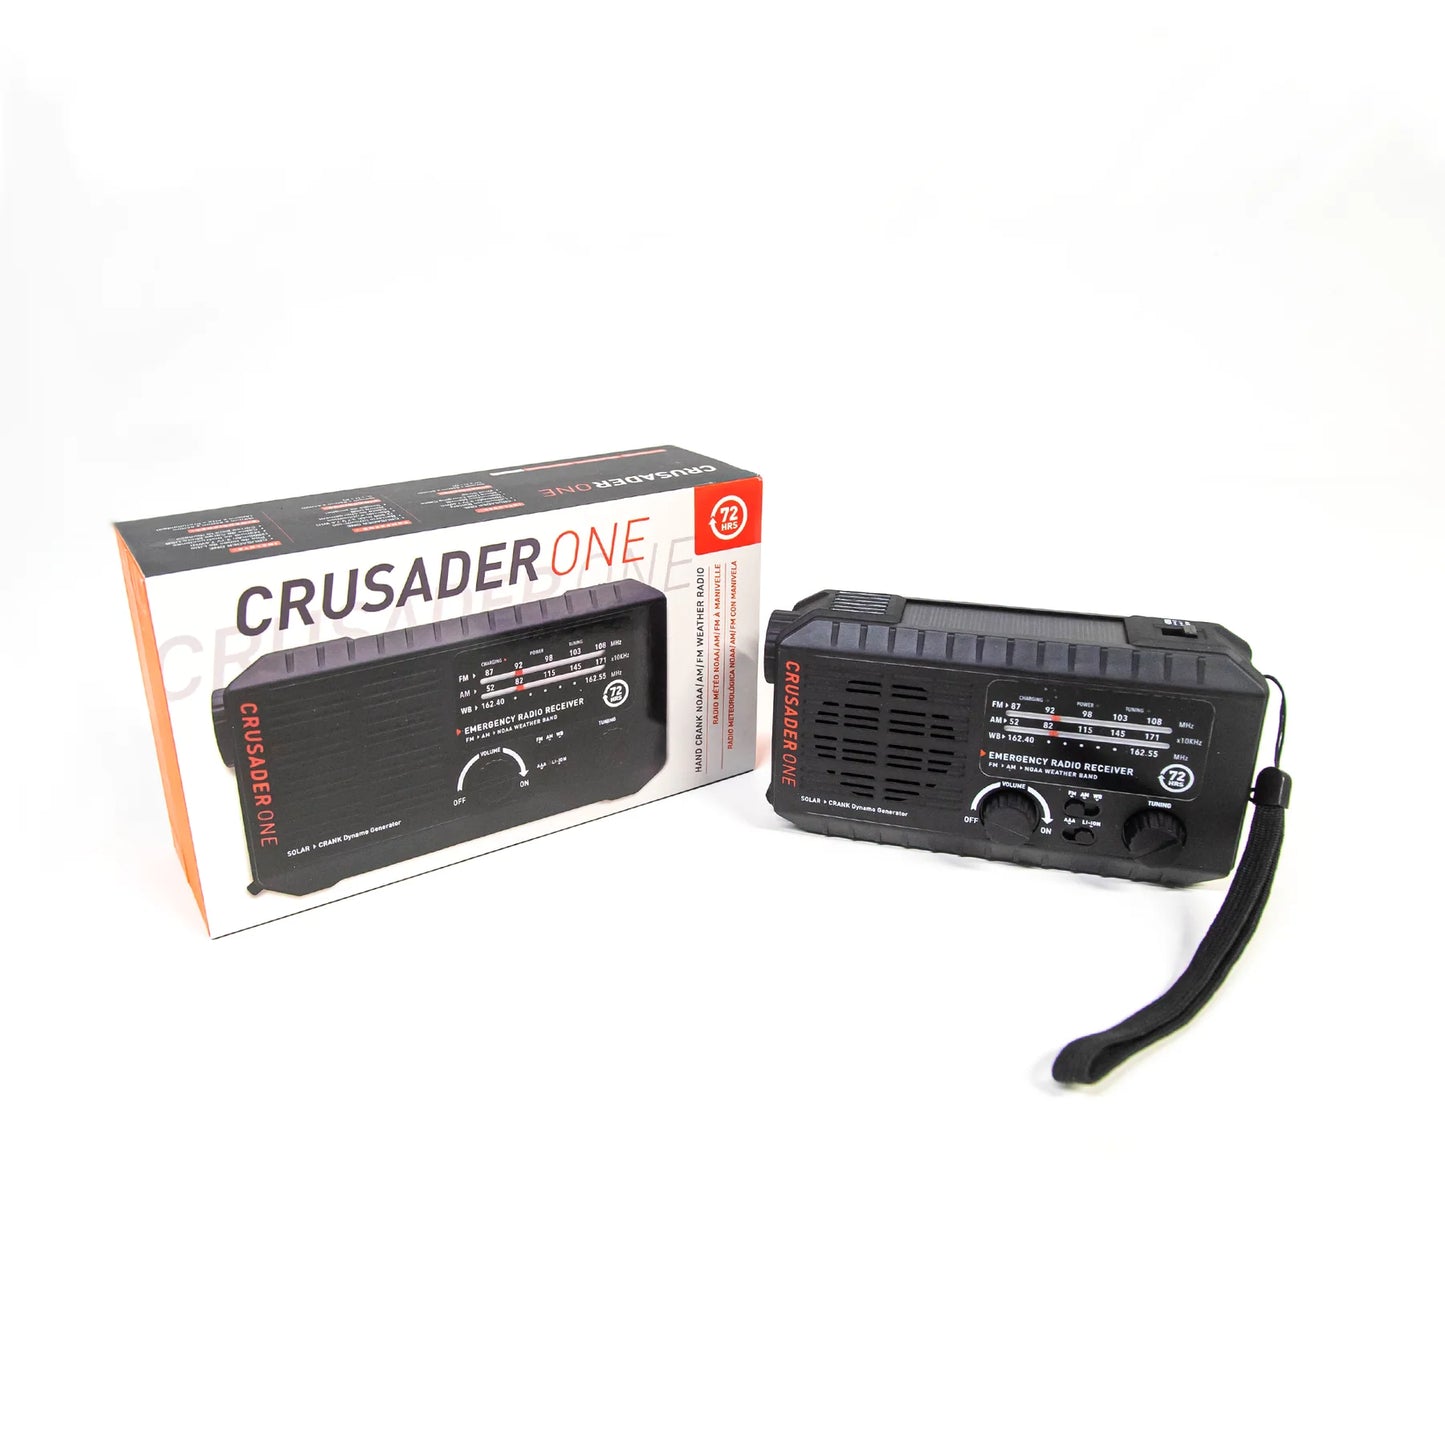 Crusader One Flashlight Analog Radio (Red)